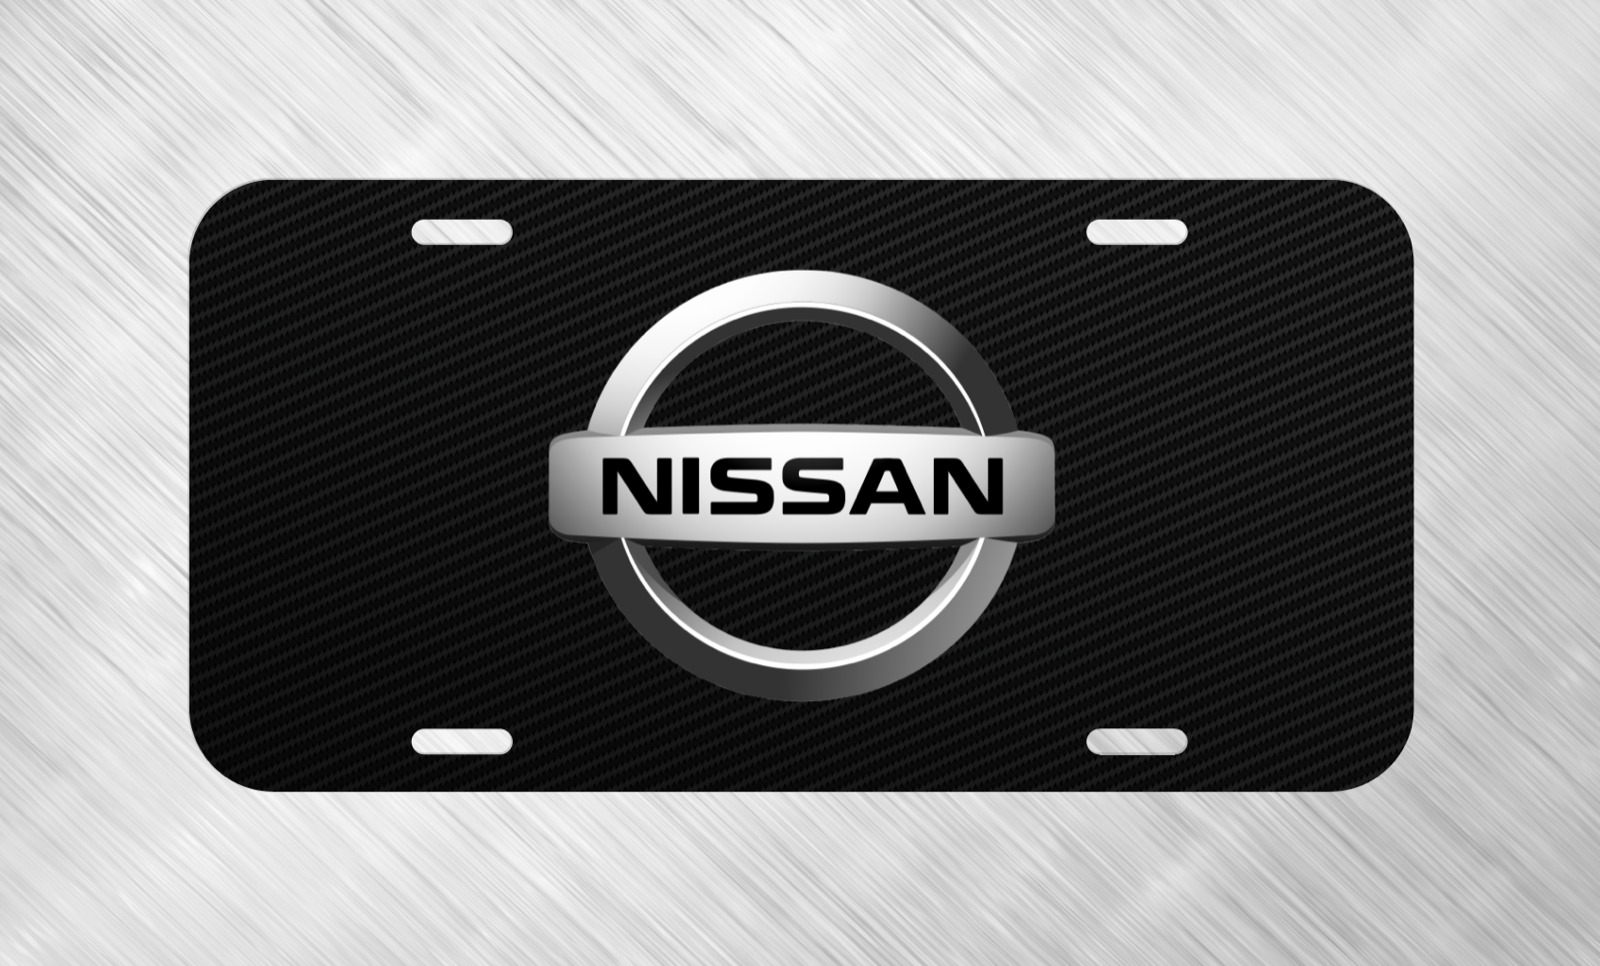 New For Nissan License Plate Auto Car Tag  Rogue Murano Versa Altima 